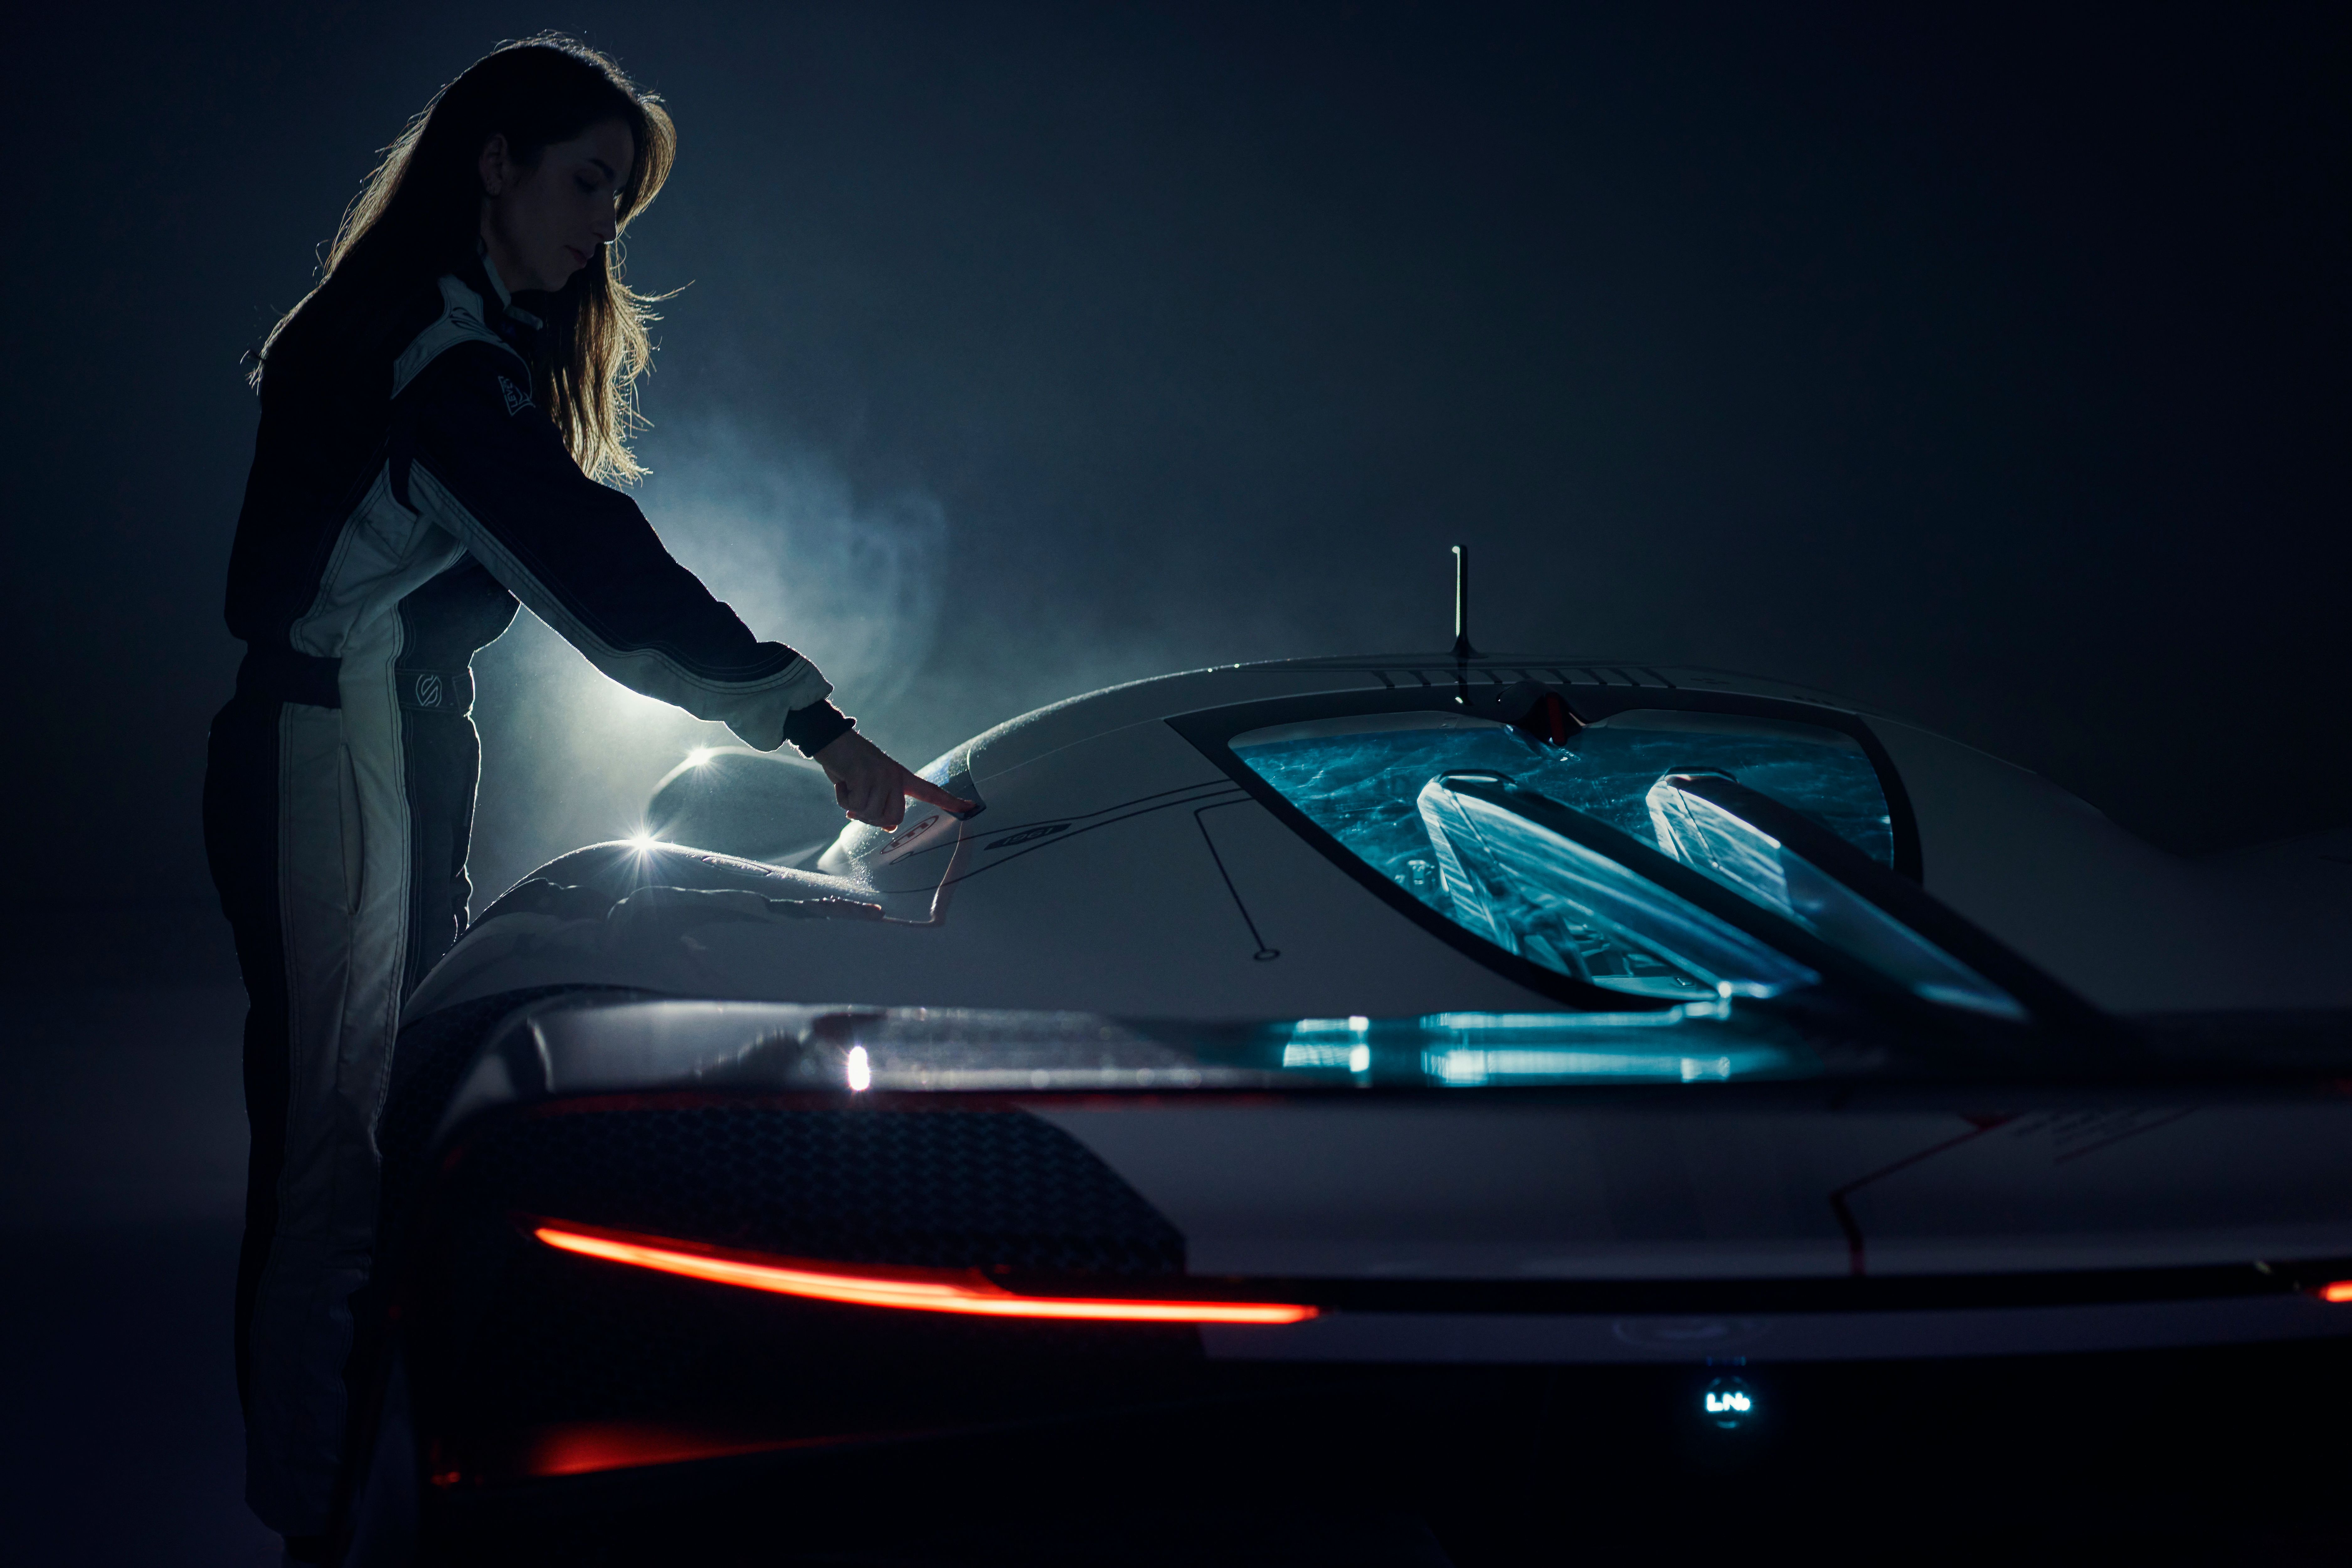 2020 Jaguar Vision Gran Turismo SV